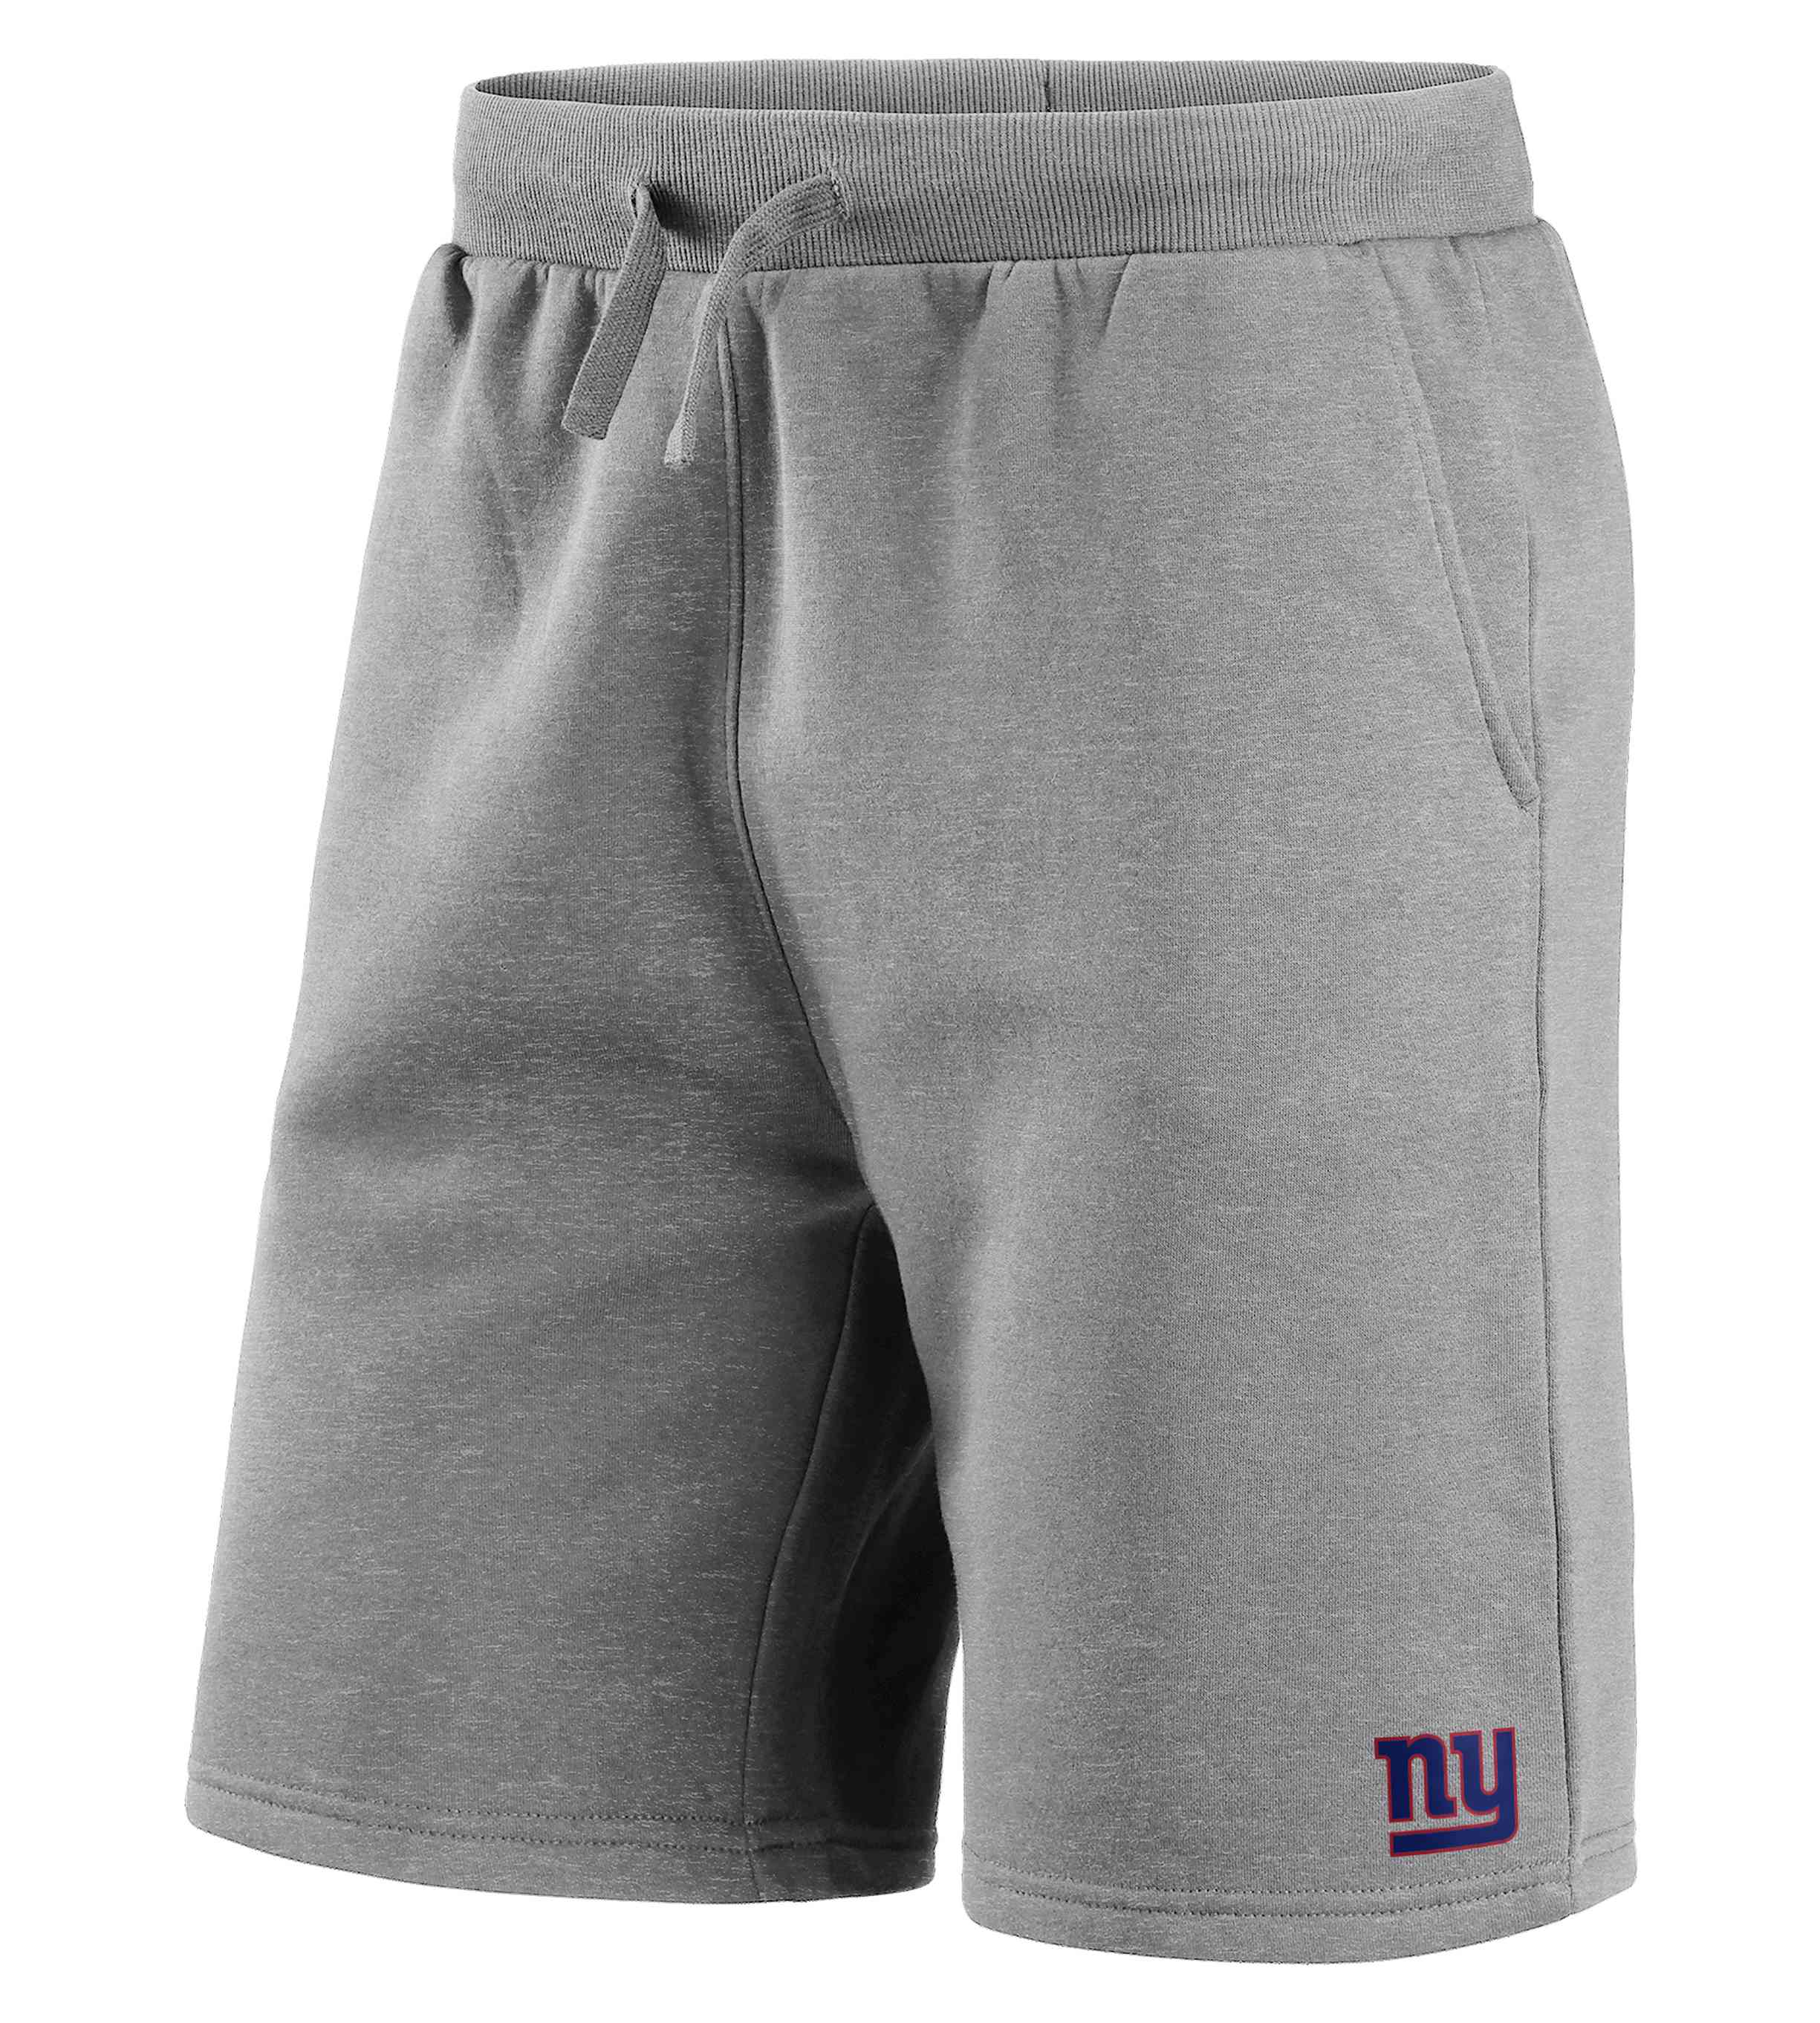 Fanatics - NFL New York Giants Primary Logo Graphic Sweat Shorts